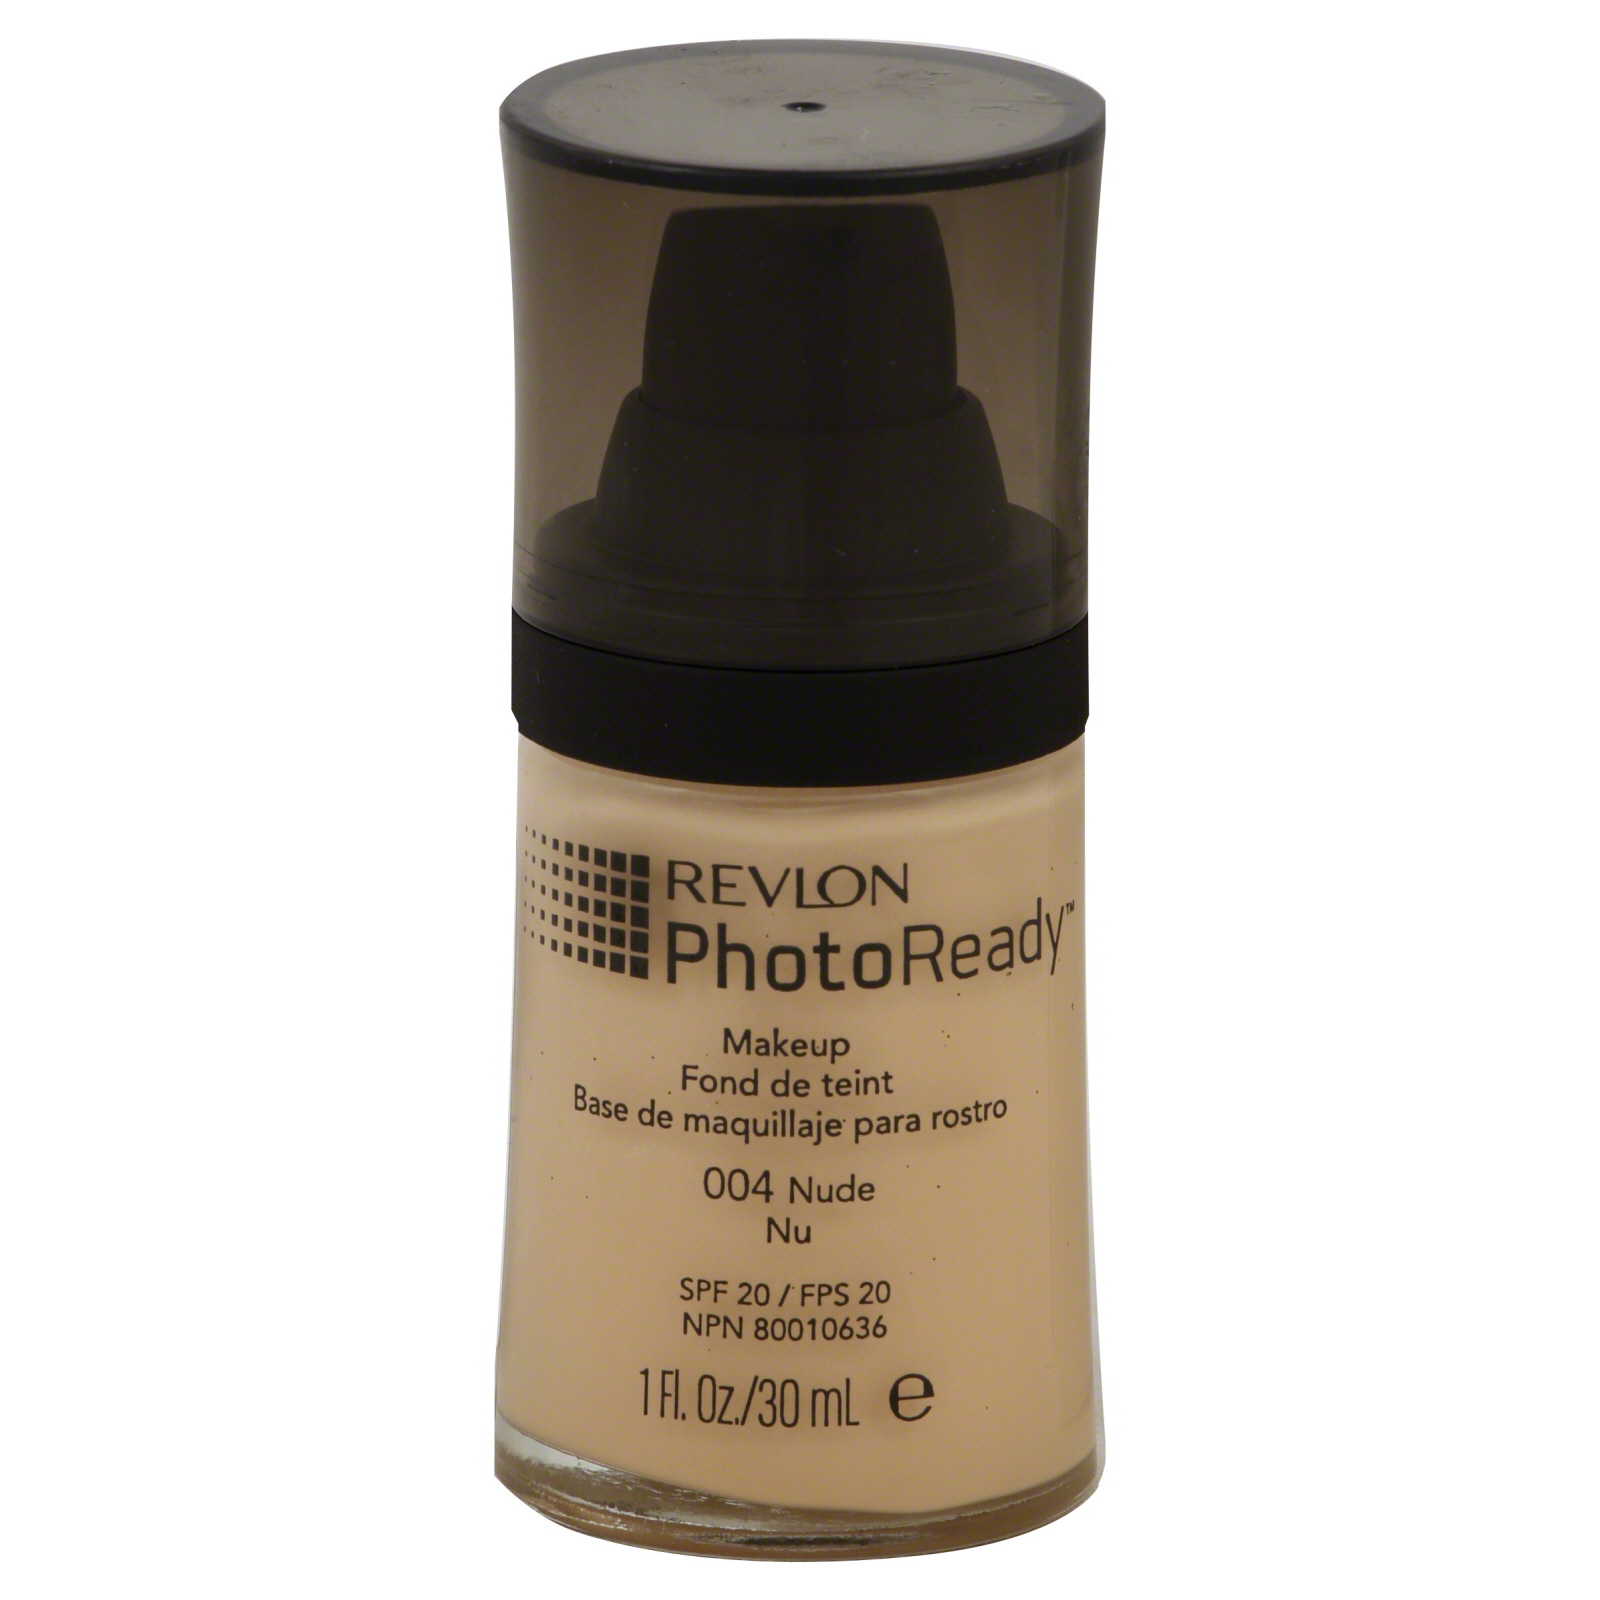 Revlon PhotoReady Makeup, Nude 004, 1 fl oz (30 ml)